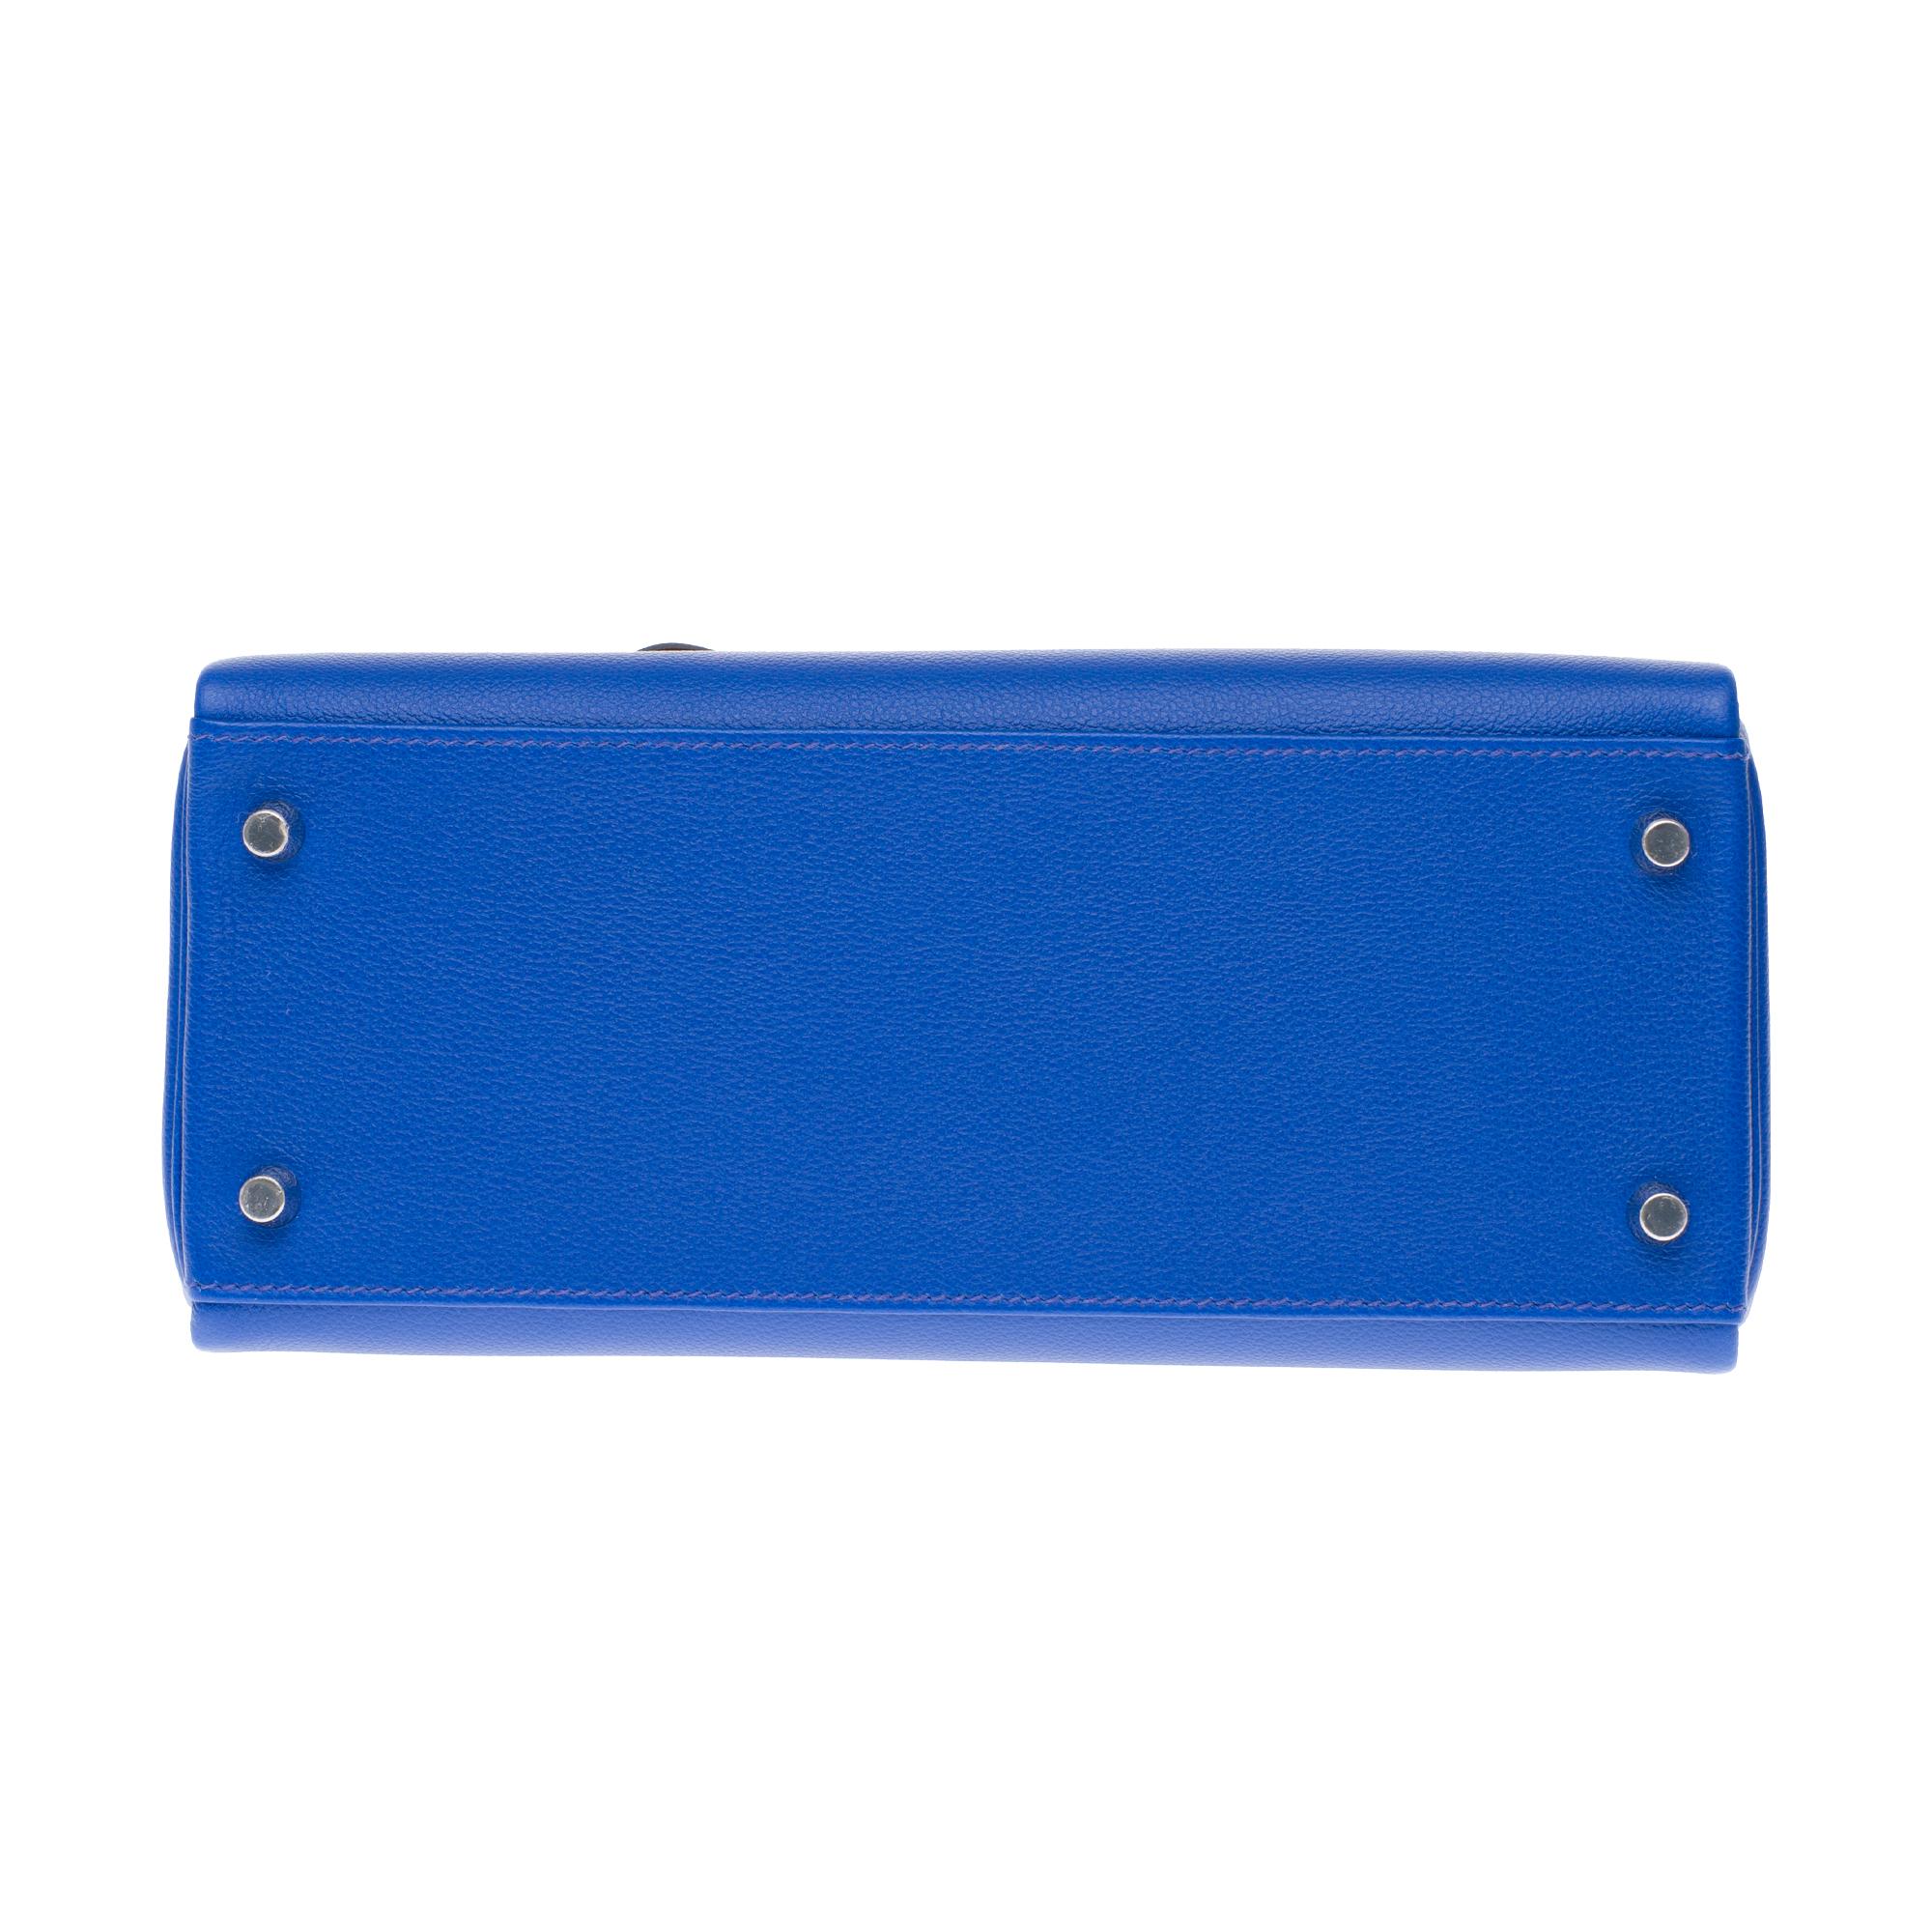 BRAND NEW-Hermès Kelly 28 Evercolor strap shoulder bag in blue royal calf, PHW 2